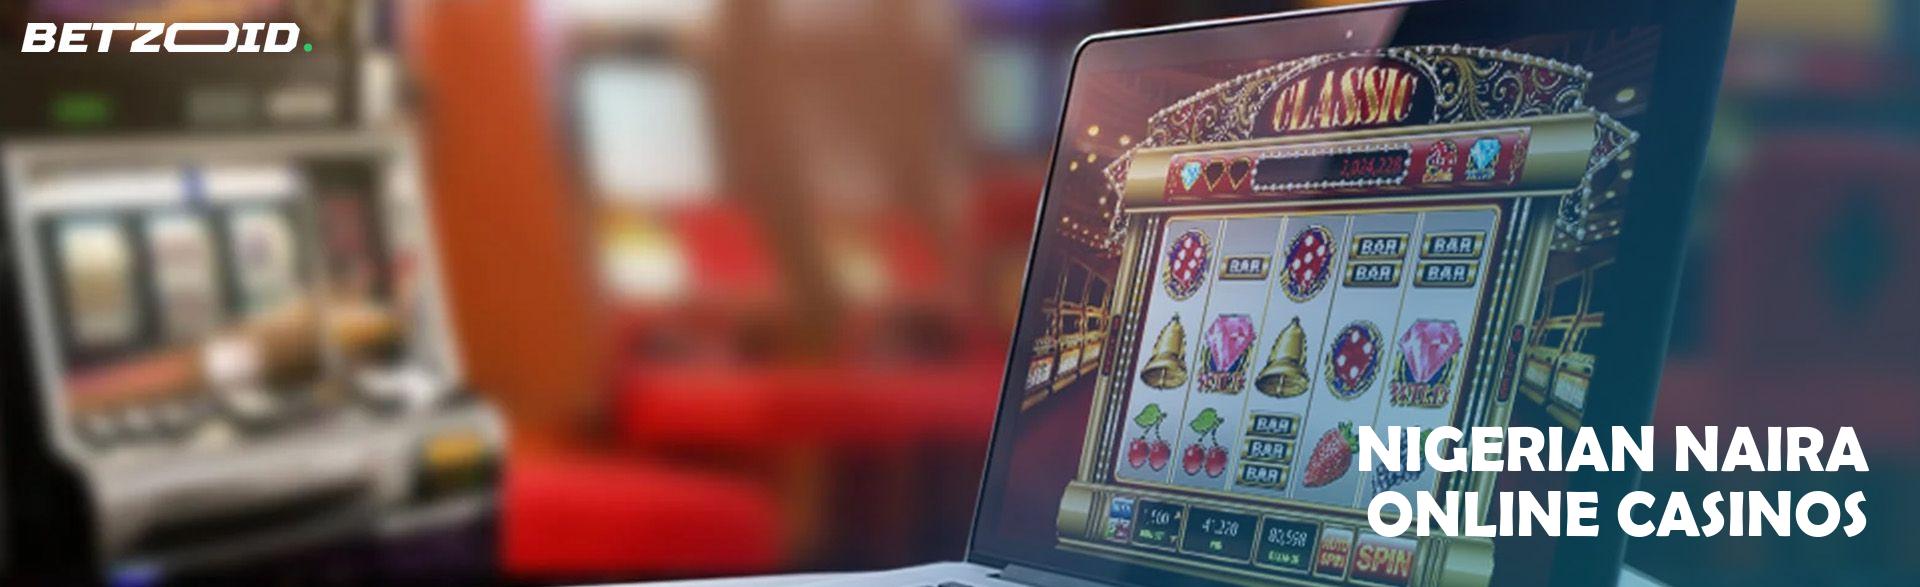 Nigerian Naira Online Casinos.